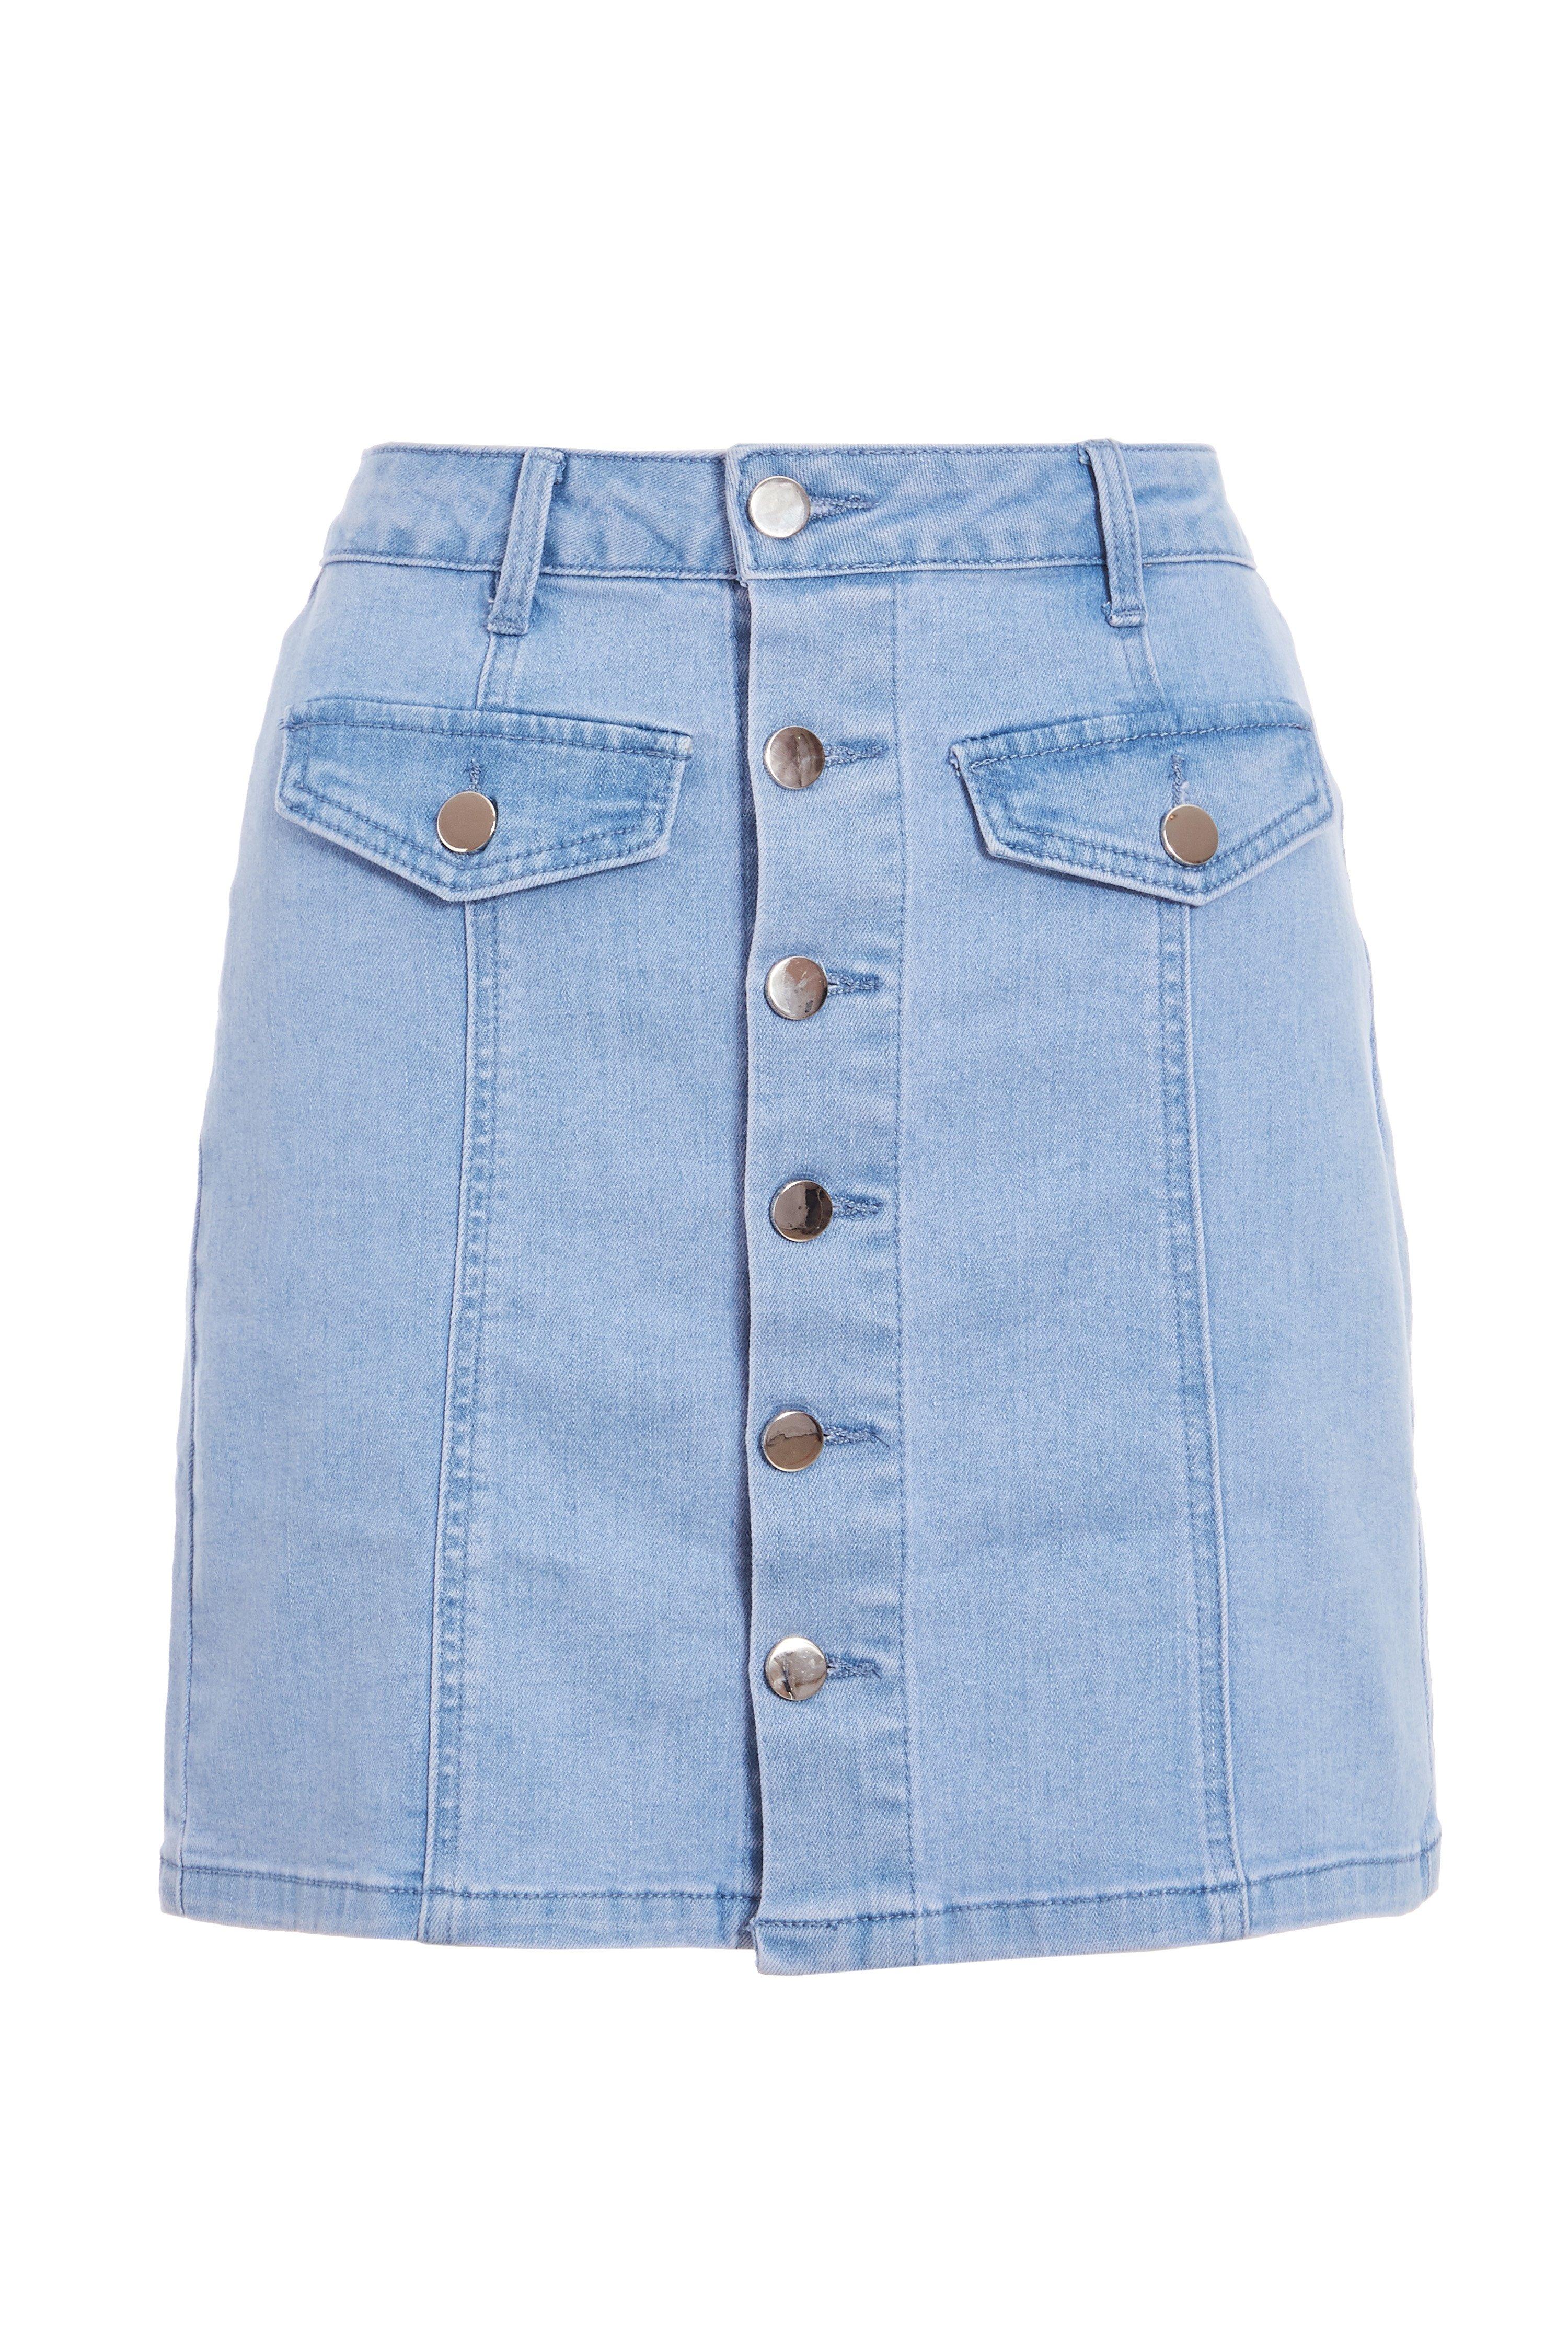 Light Blue Denim Button Front Mini Skirt - Quiz Clothing